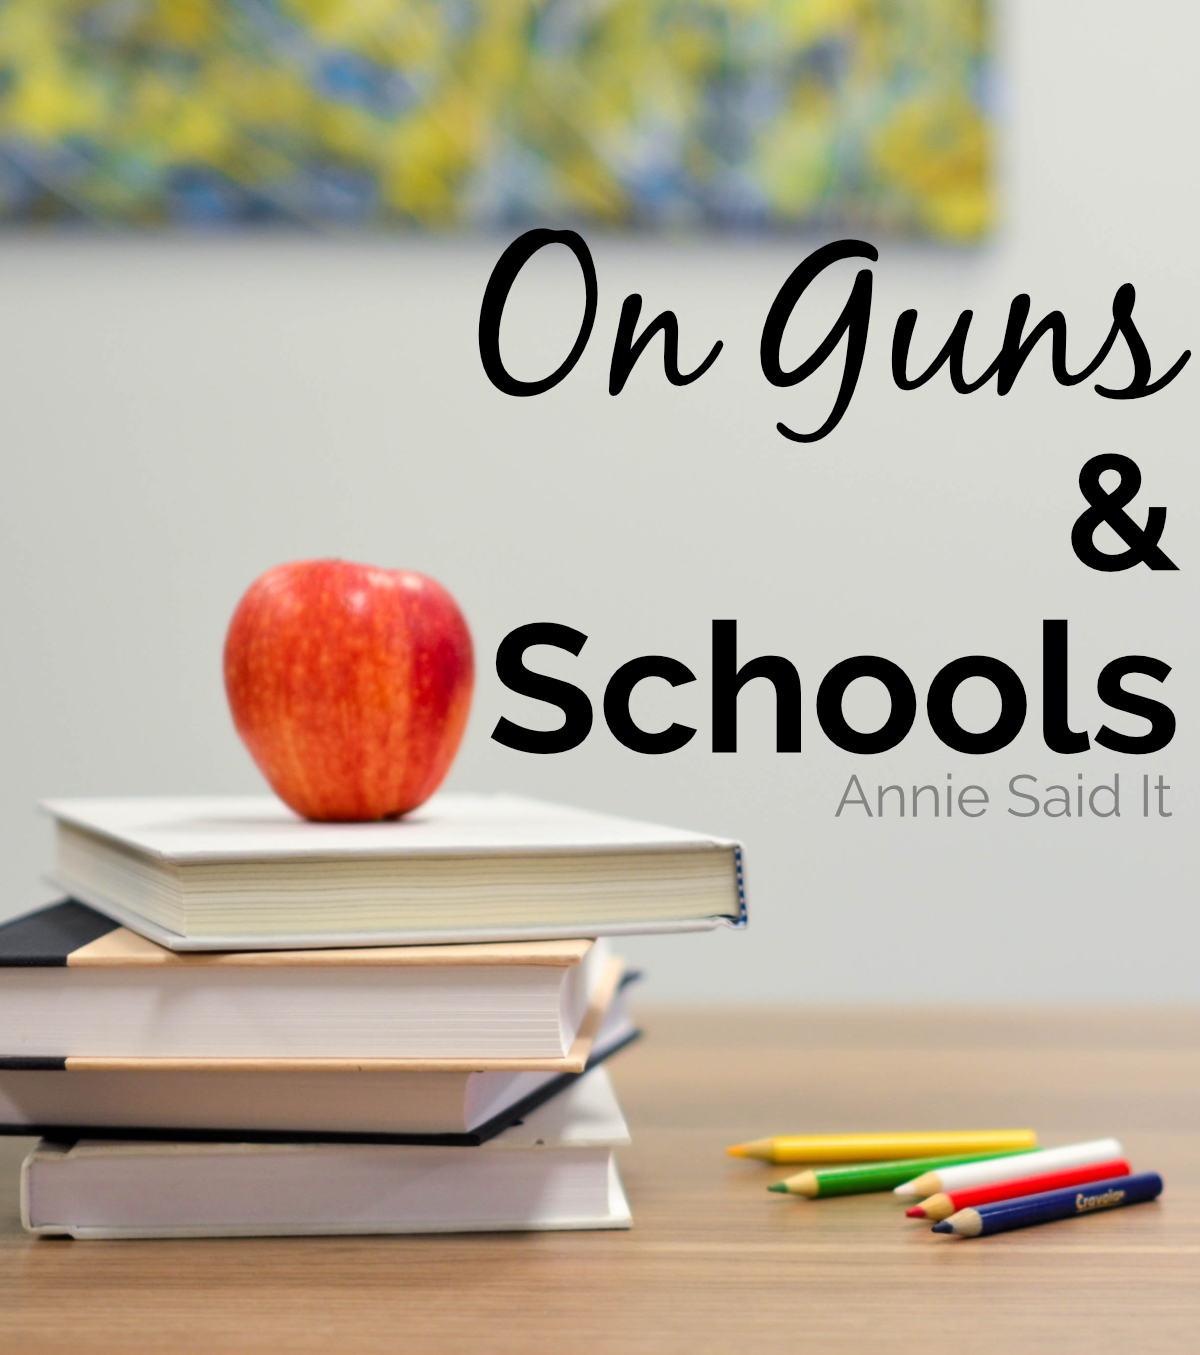 Debunking Myths on Guns and Schools